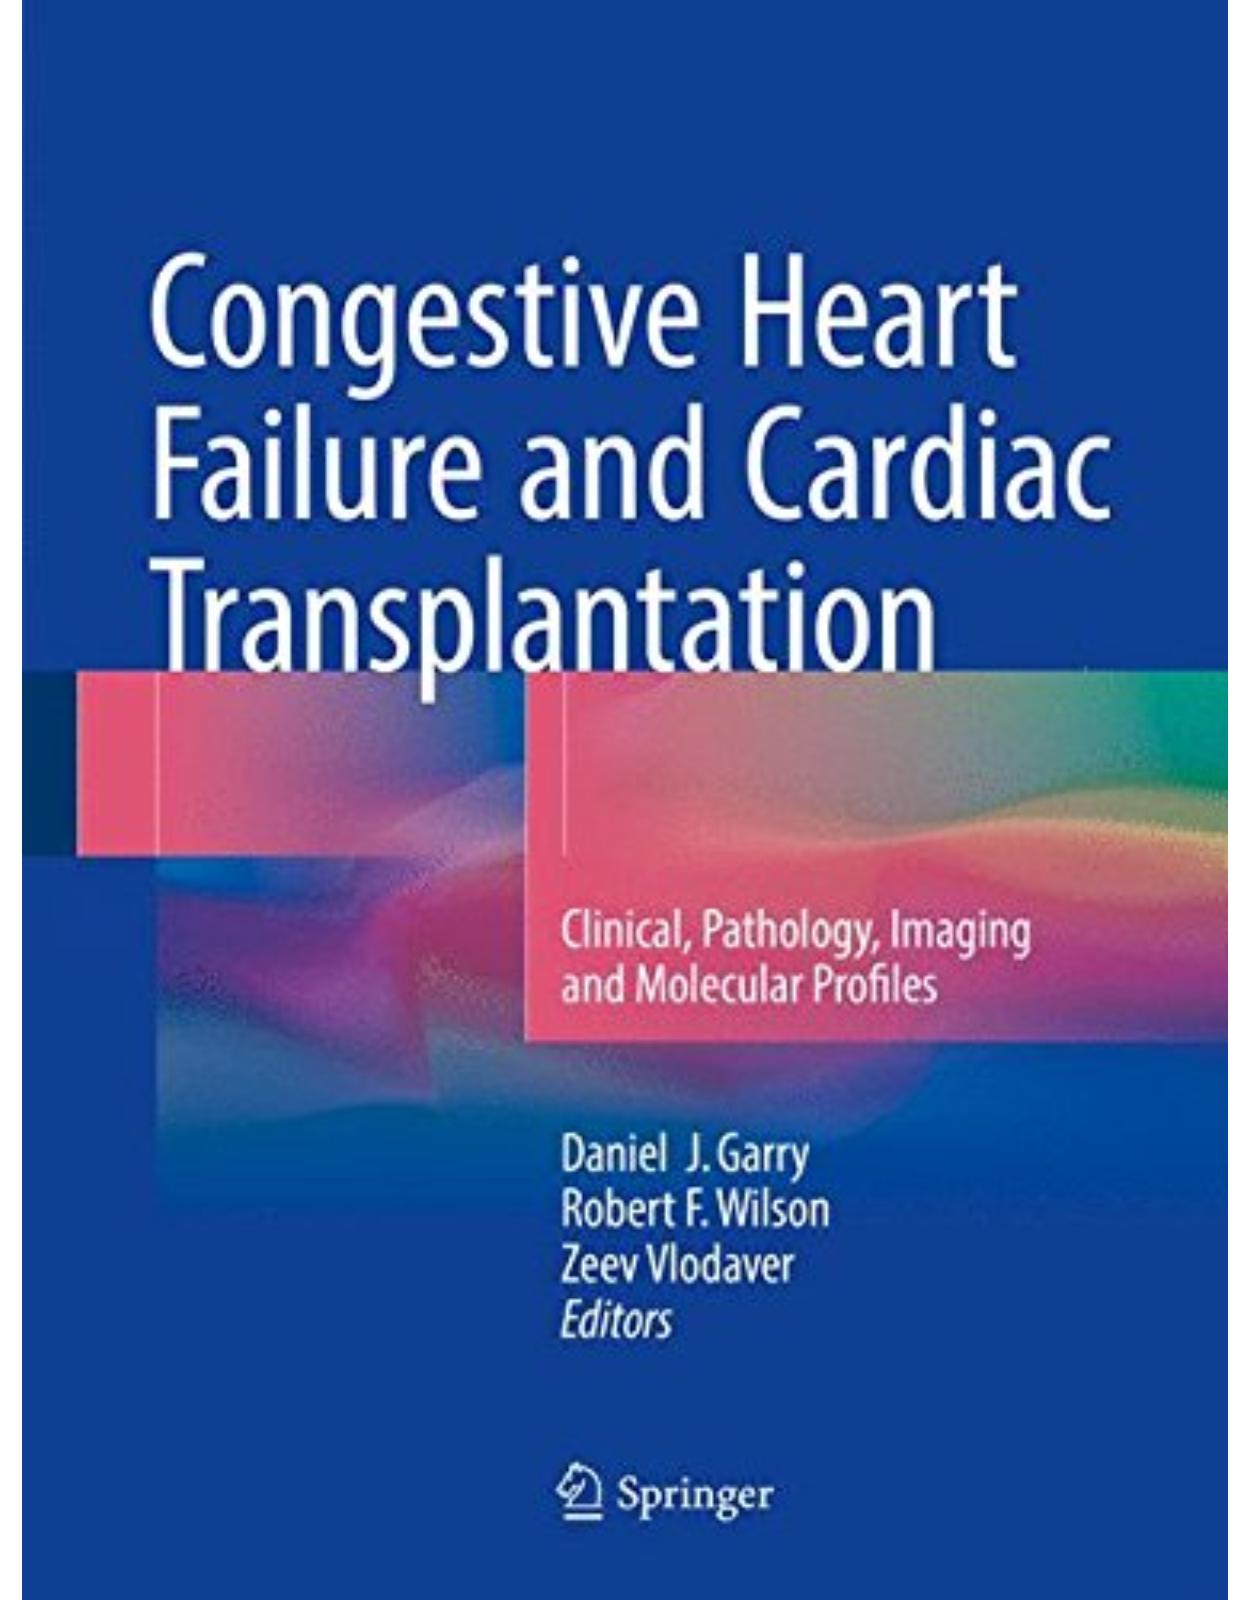 Congestive Heart Failure and Cardiac Transplantation: Clinical, Pathology, Imaging and Molecular Profiles